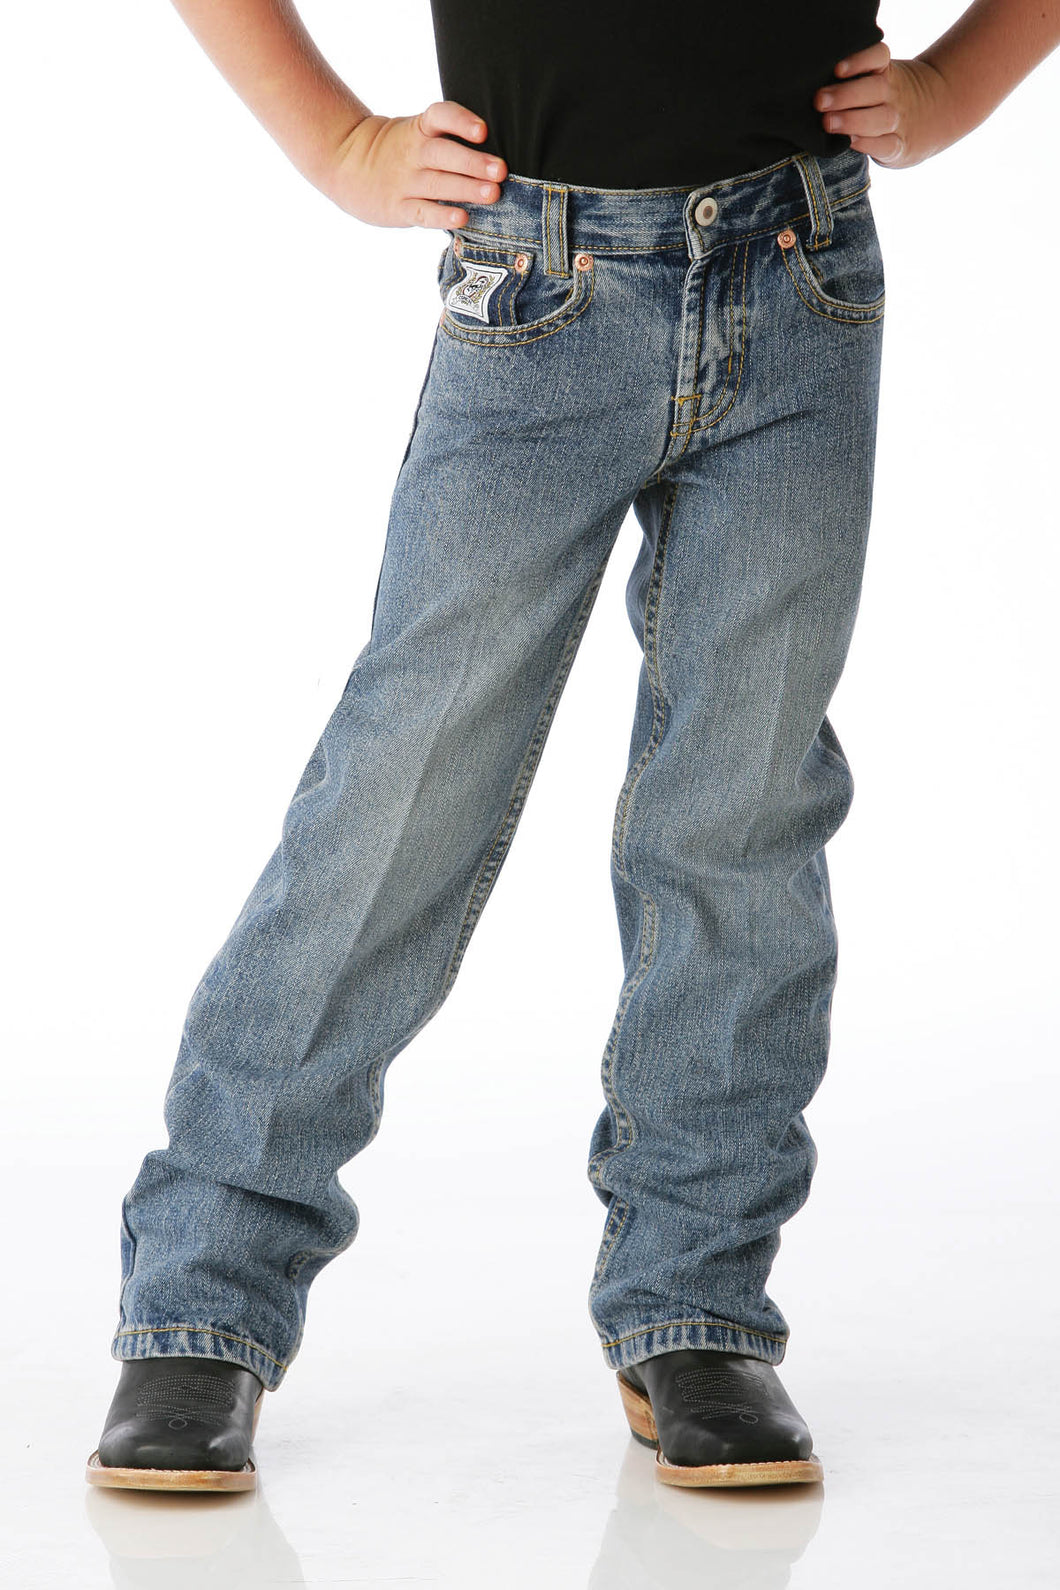 Cinch Boy's White Label Jeans